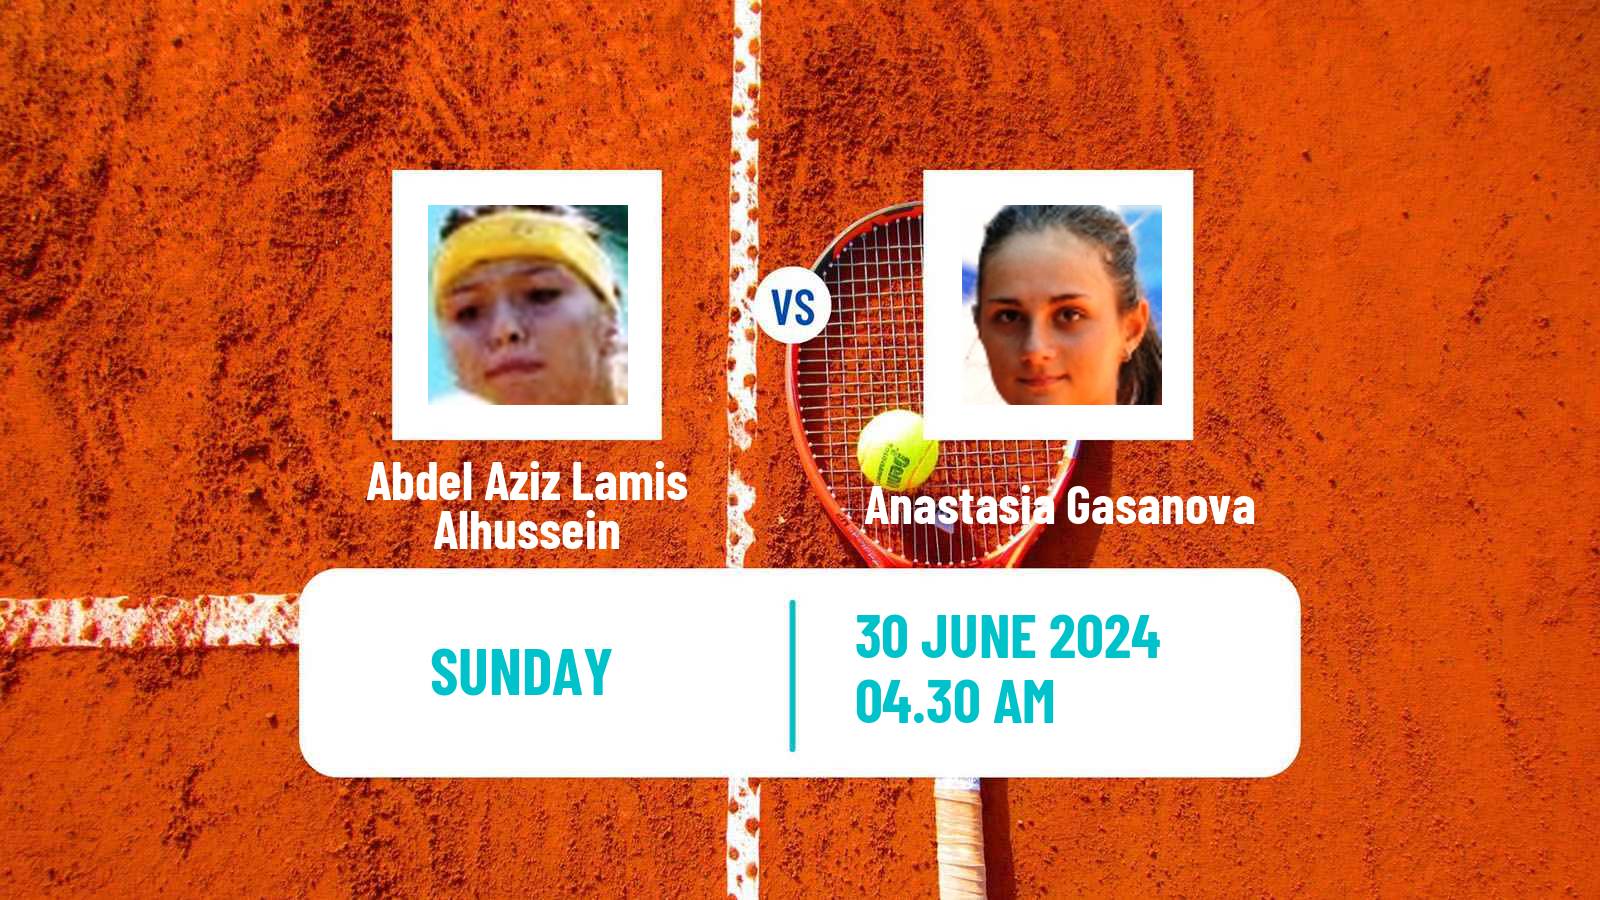 Tennis ITF W15 Monastir 24 Women Abdel Aziz Lamis Alhussein - Anastasia Gasanova